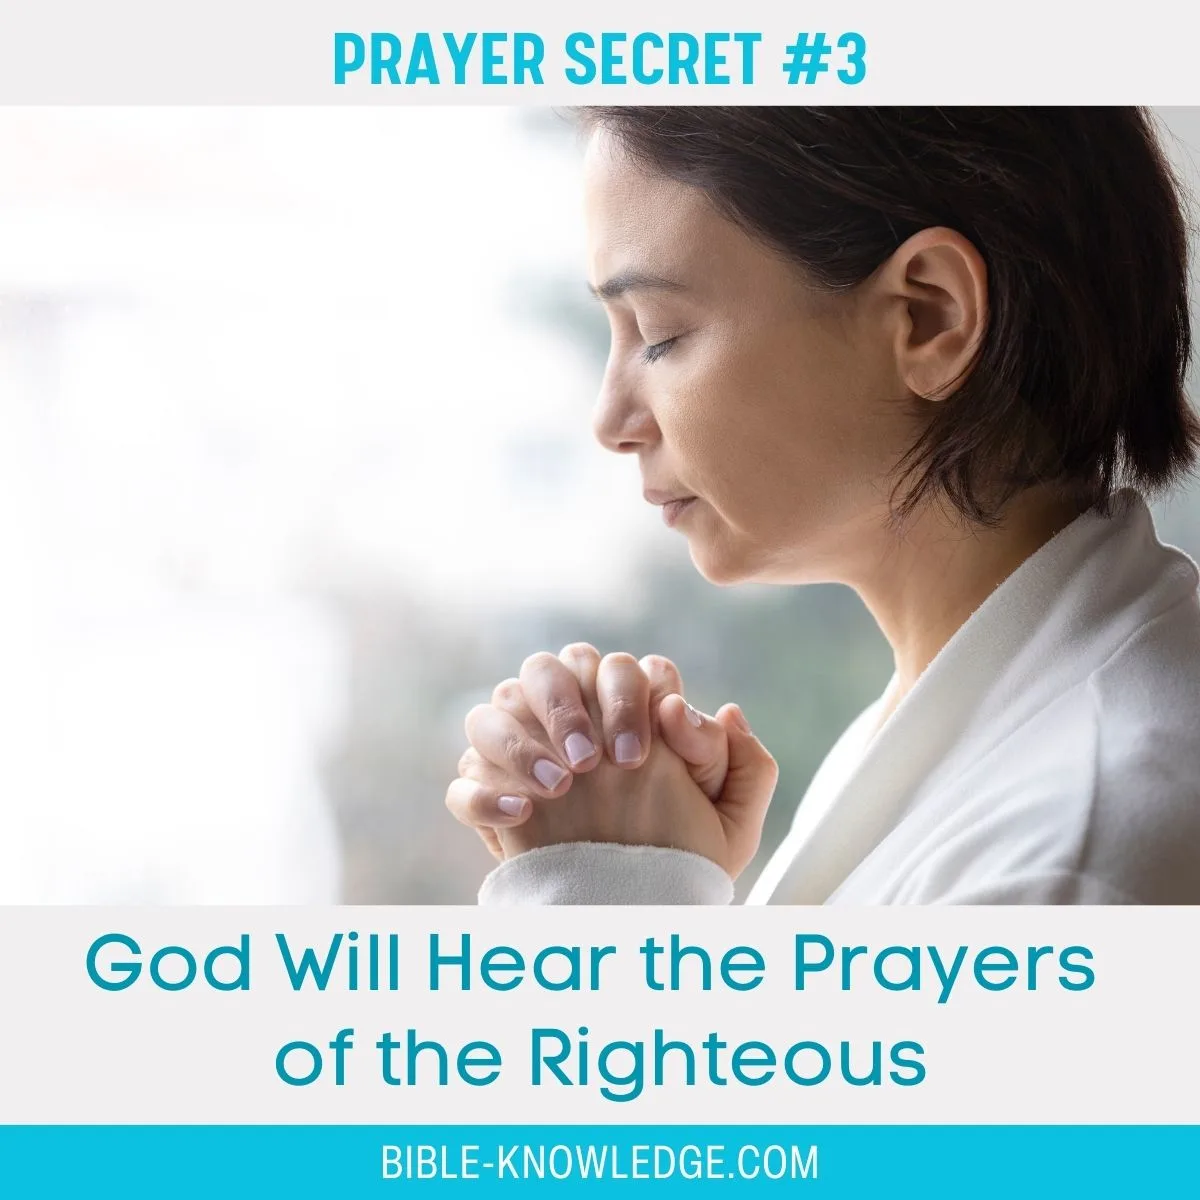 Prayer Secret #3 - God Will Hear the Prayers of the Righteous